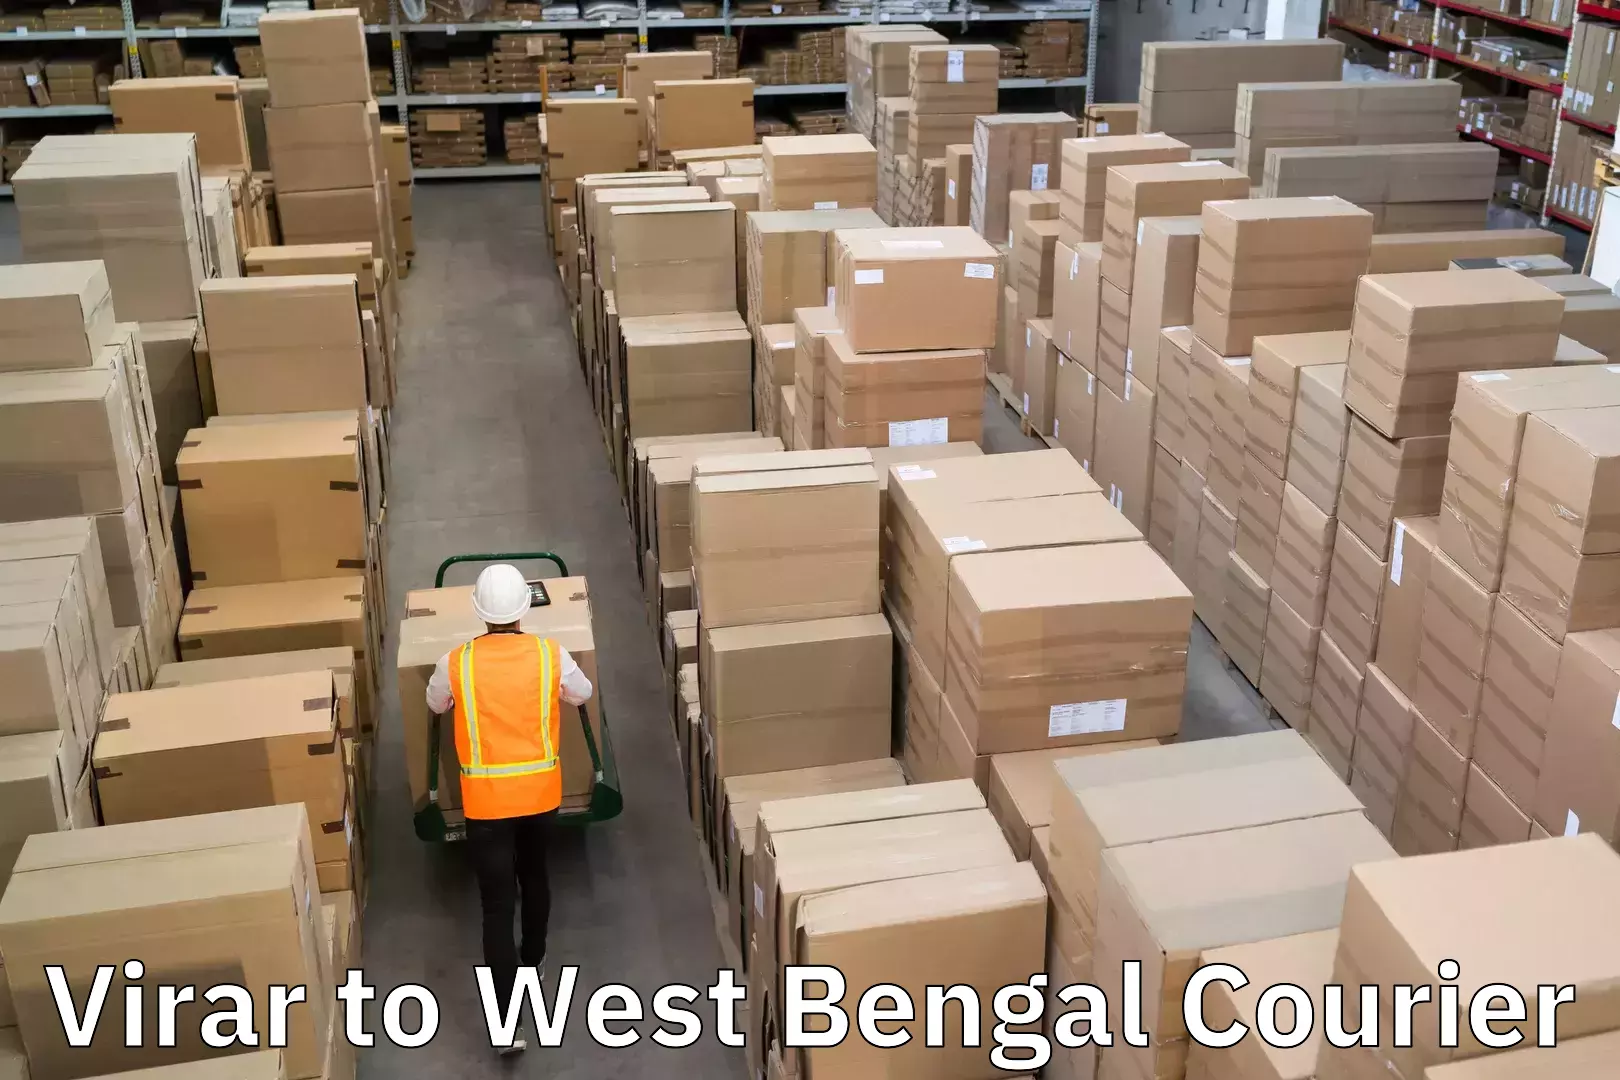 Digital courier platforms Virar to West Bengal